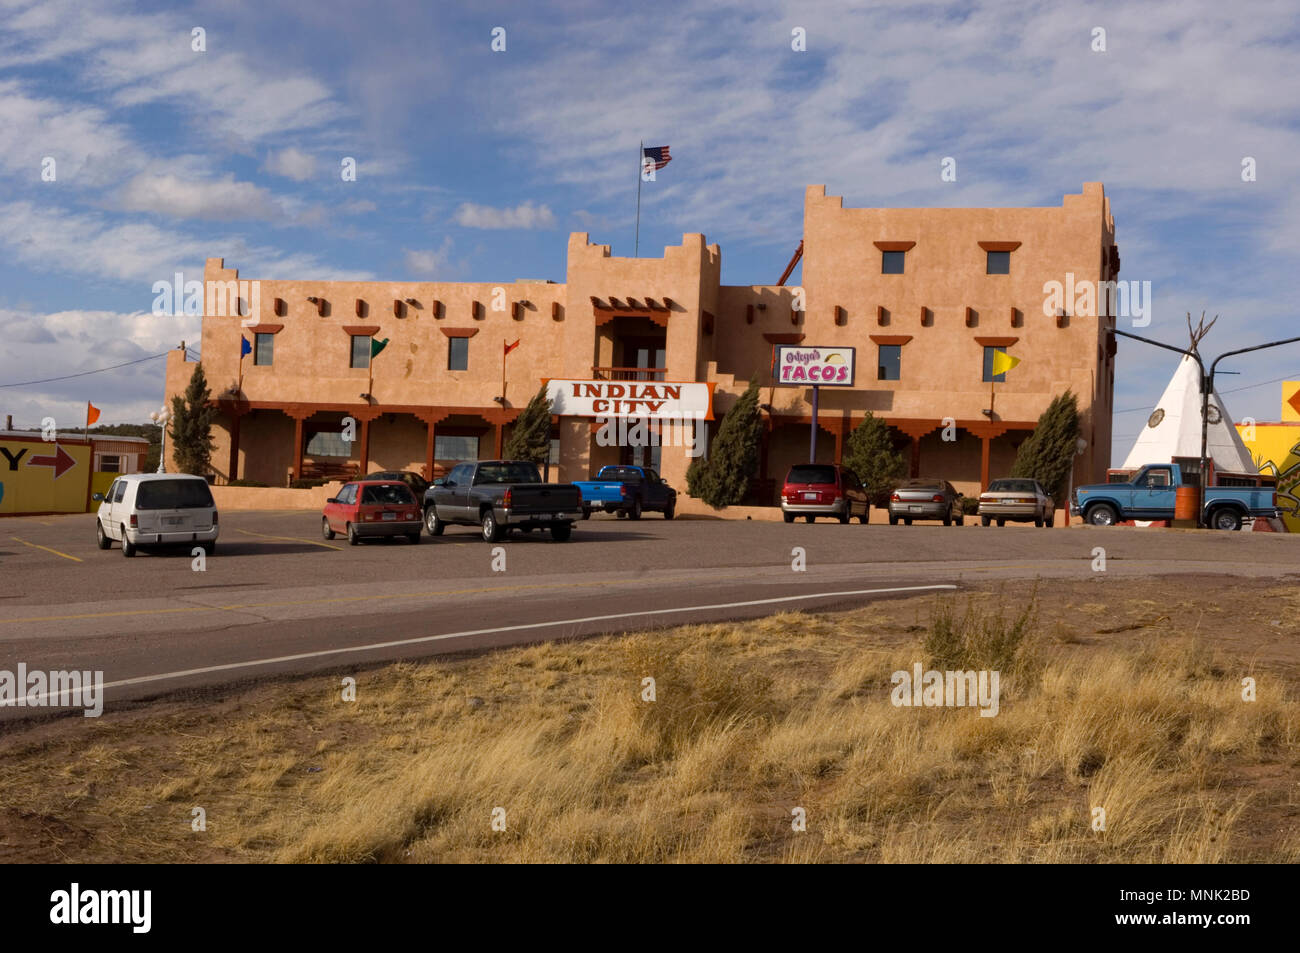 Am Straßenrand Anziehung und Souvenir Shop auf dem Weg nach Santa Fe, New Mexico Stockfoto